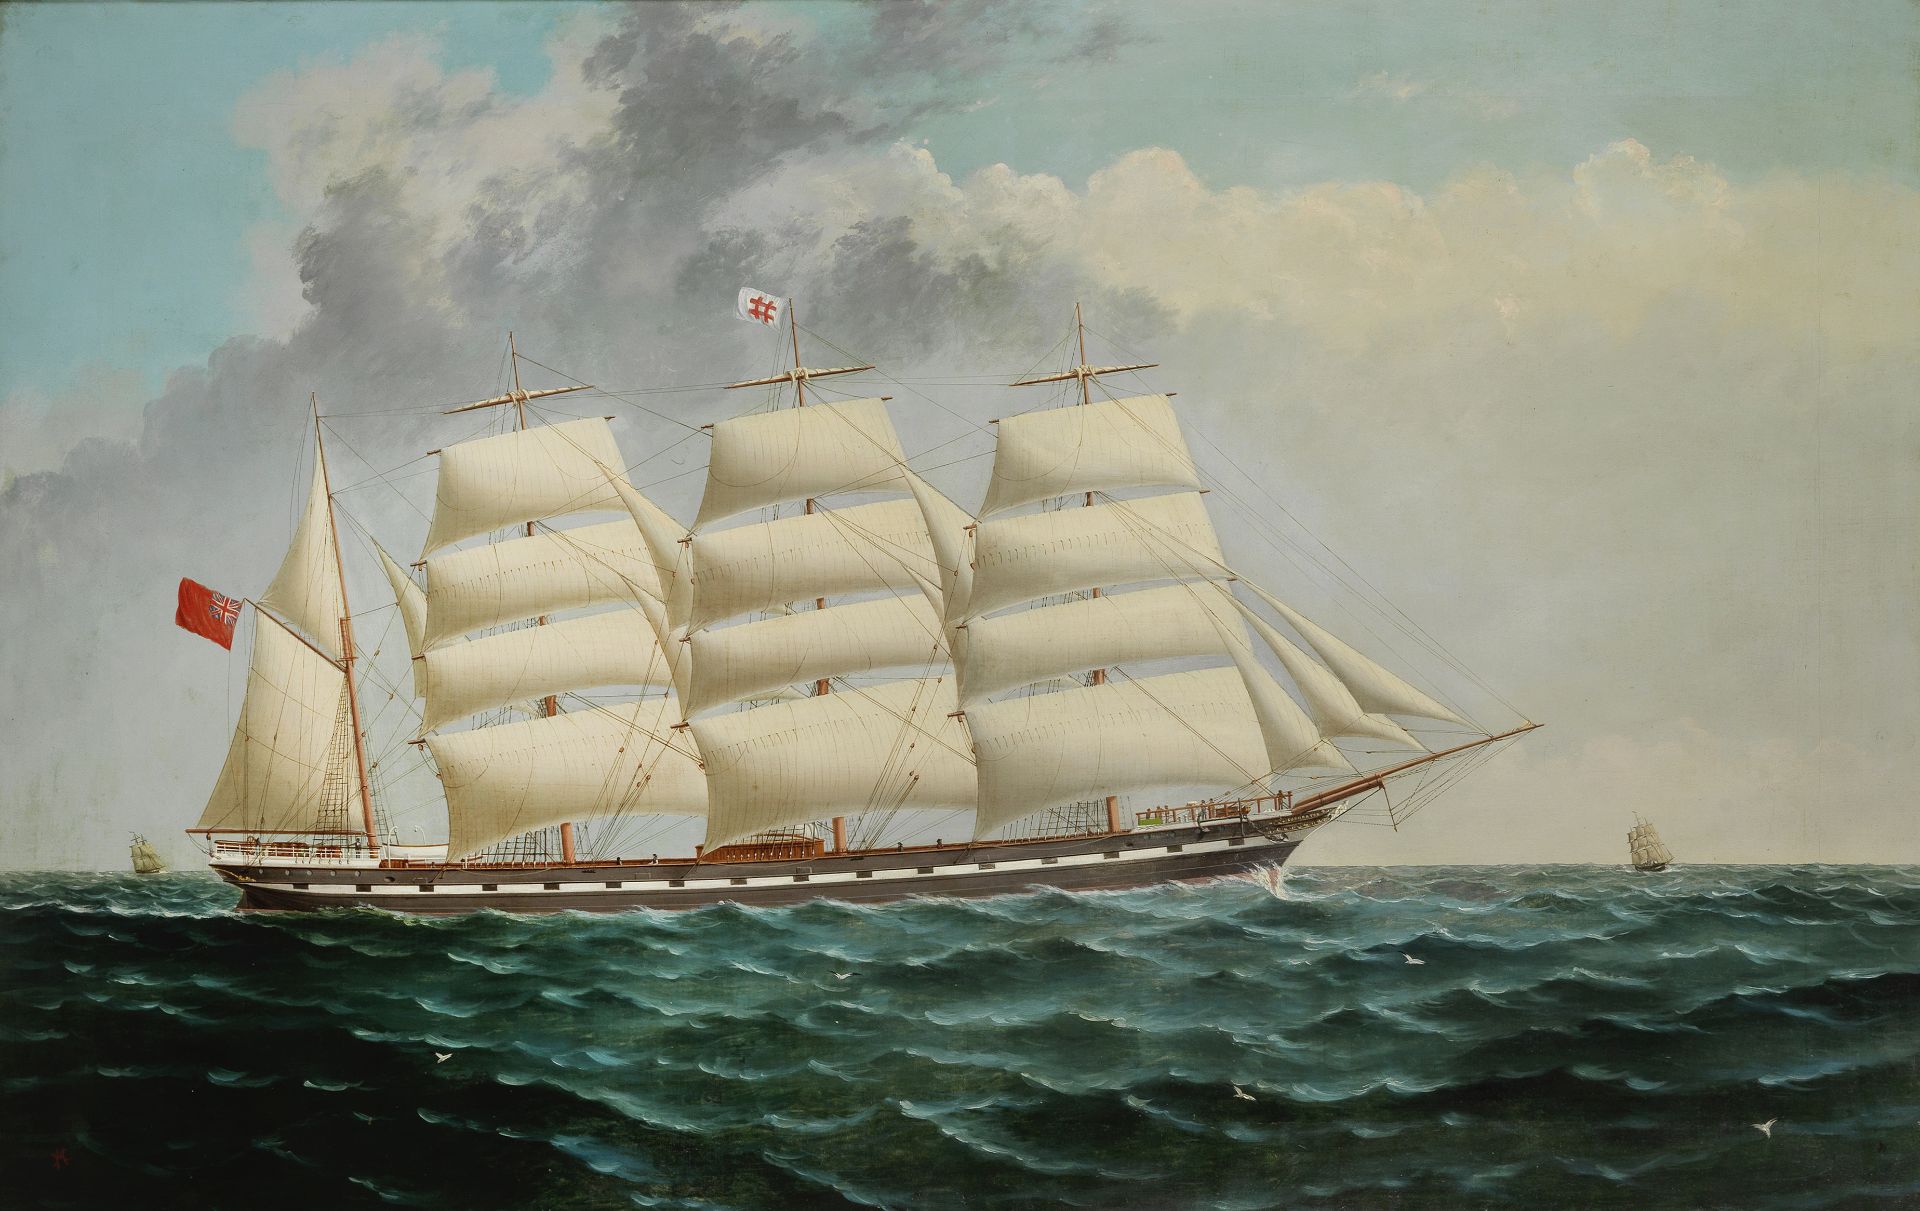 British School, 19th Century The Euphrates at full sail